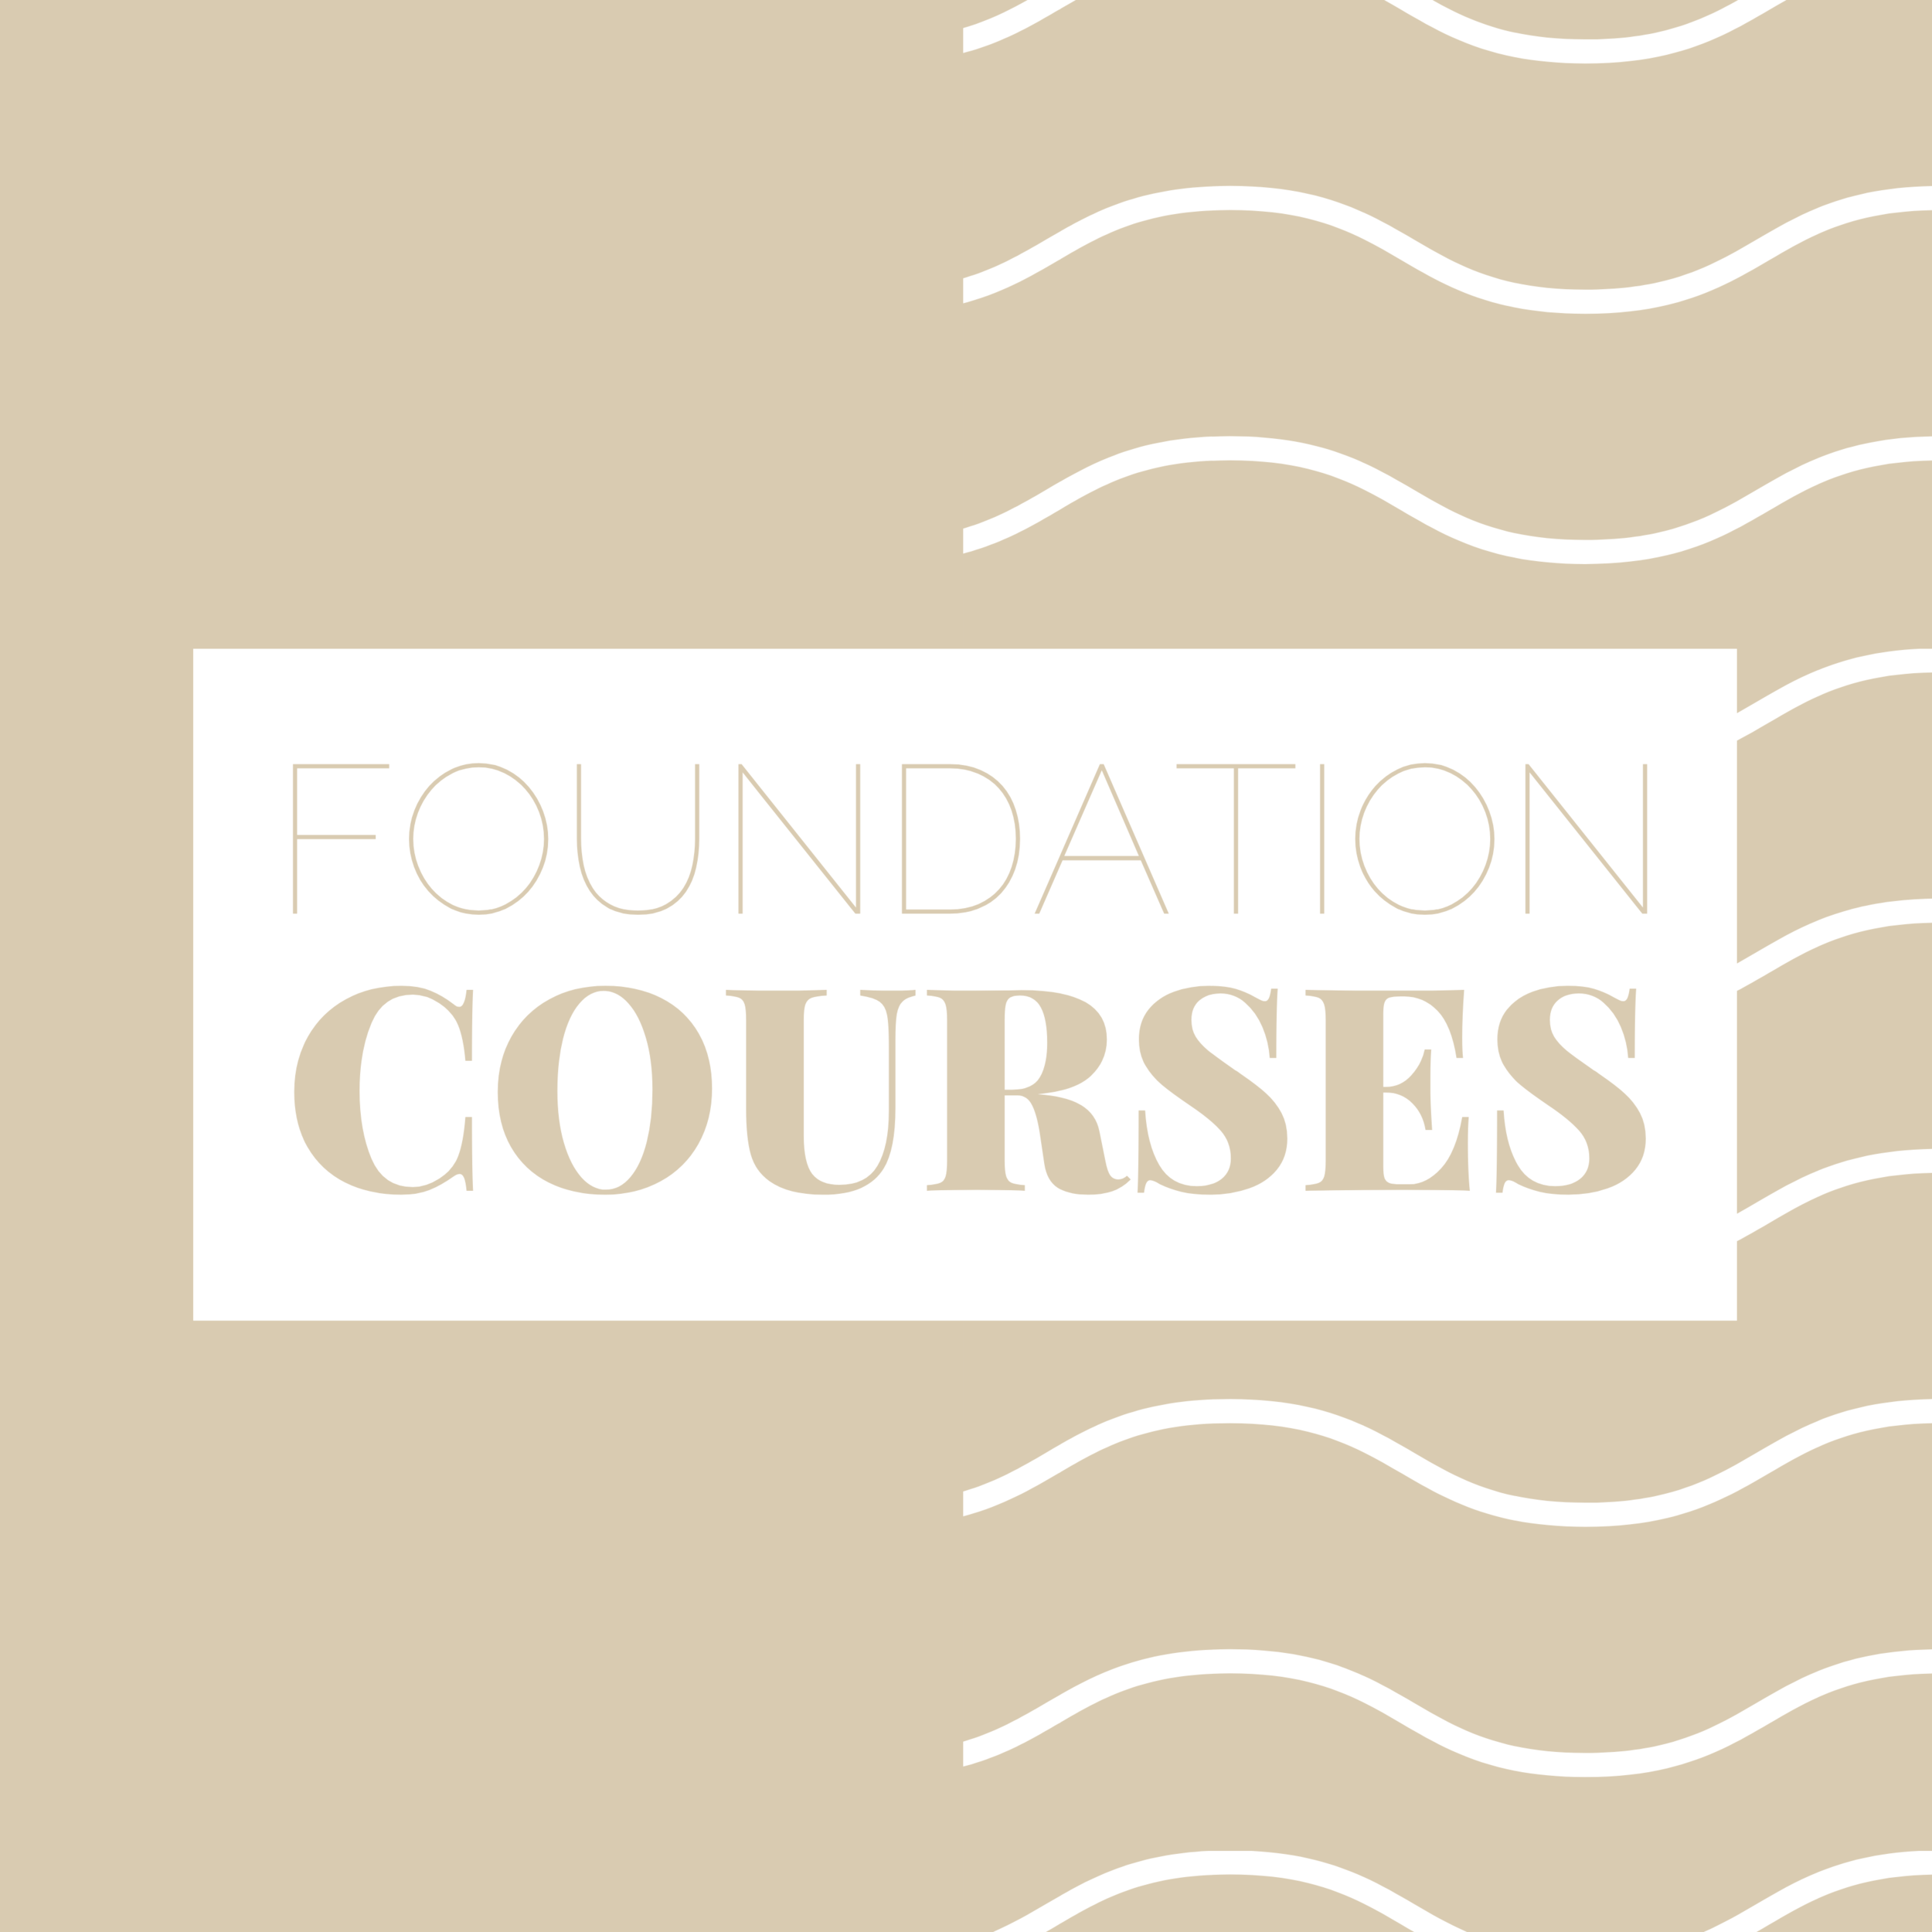  - Foundation Streams Course Files